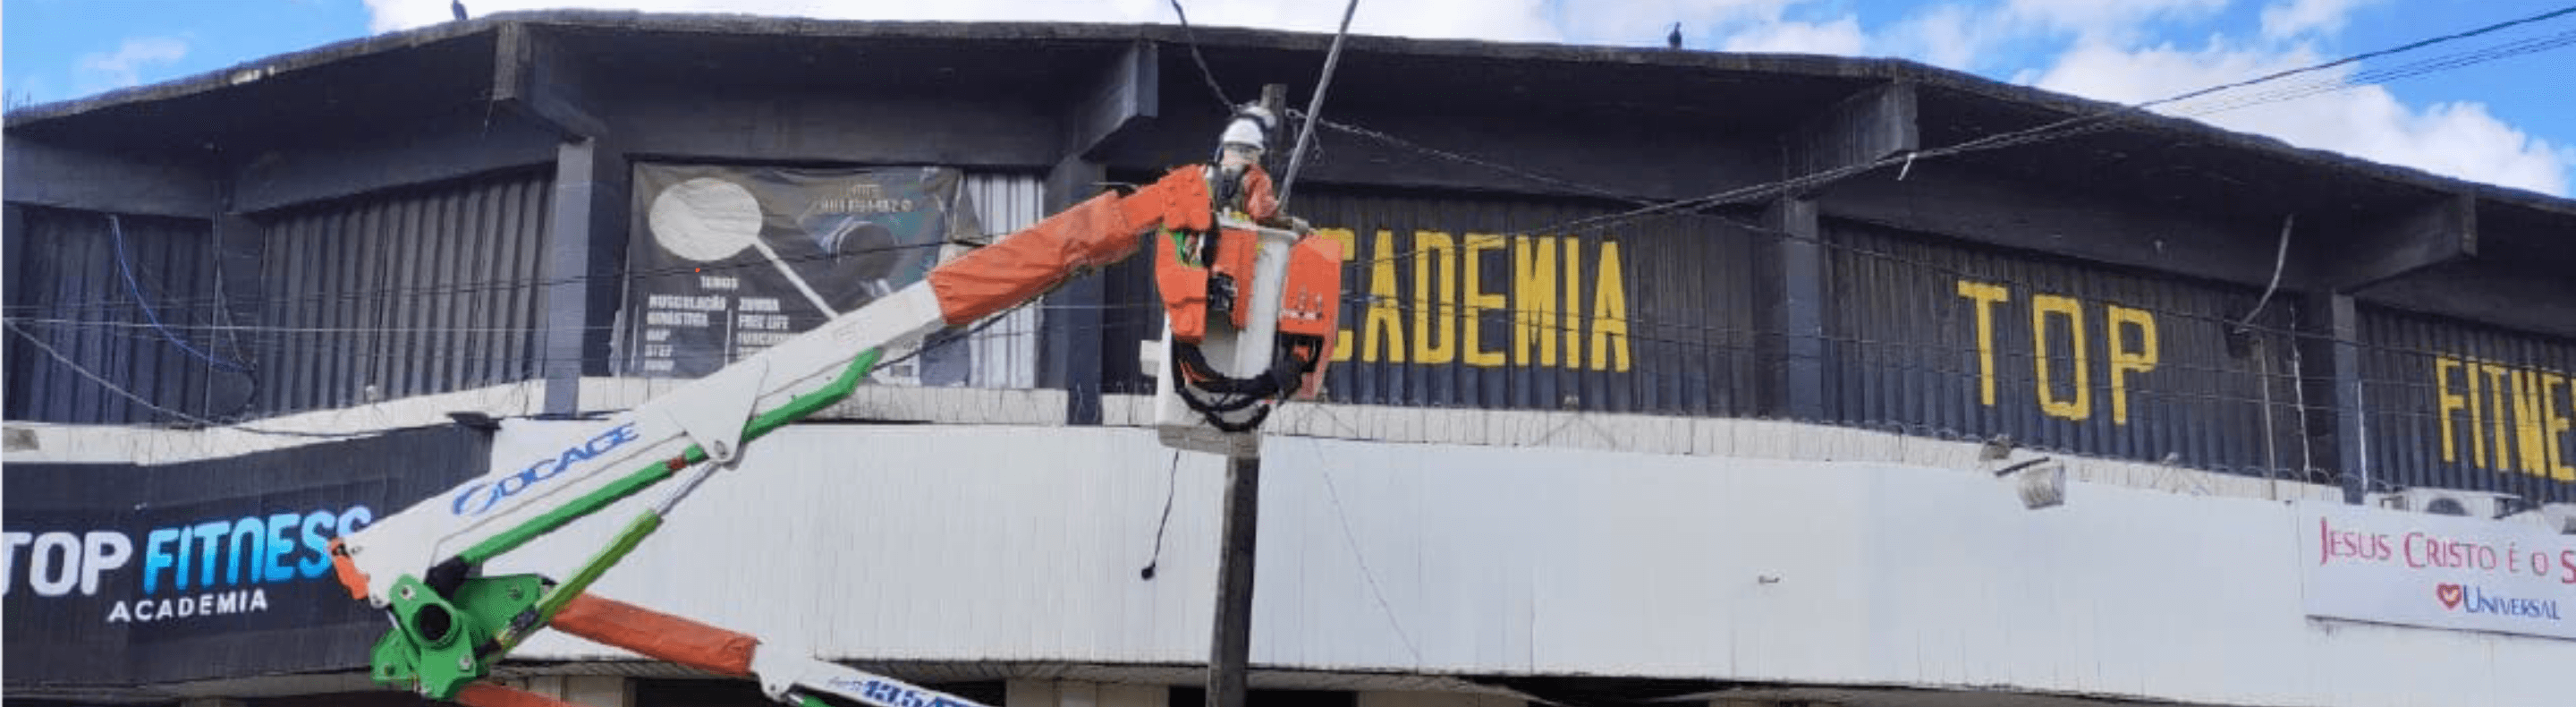 Eletricista da Neoenergia Pernambuco inspecionando rede